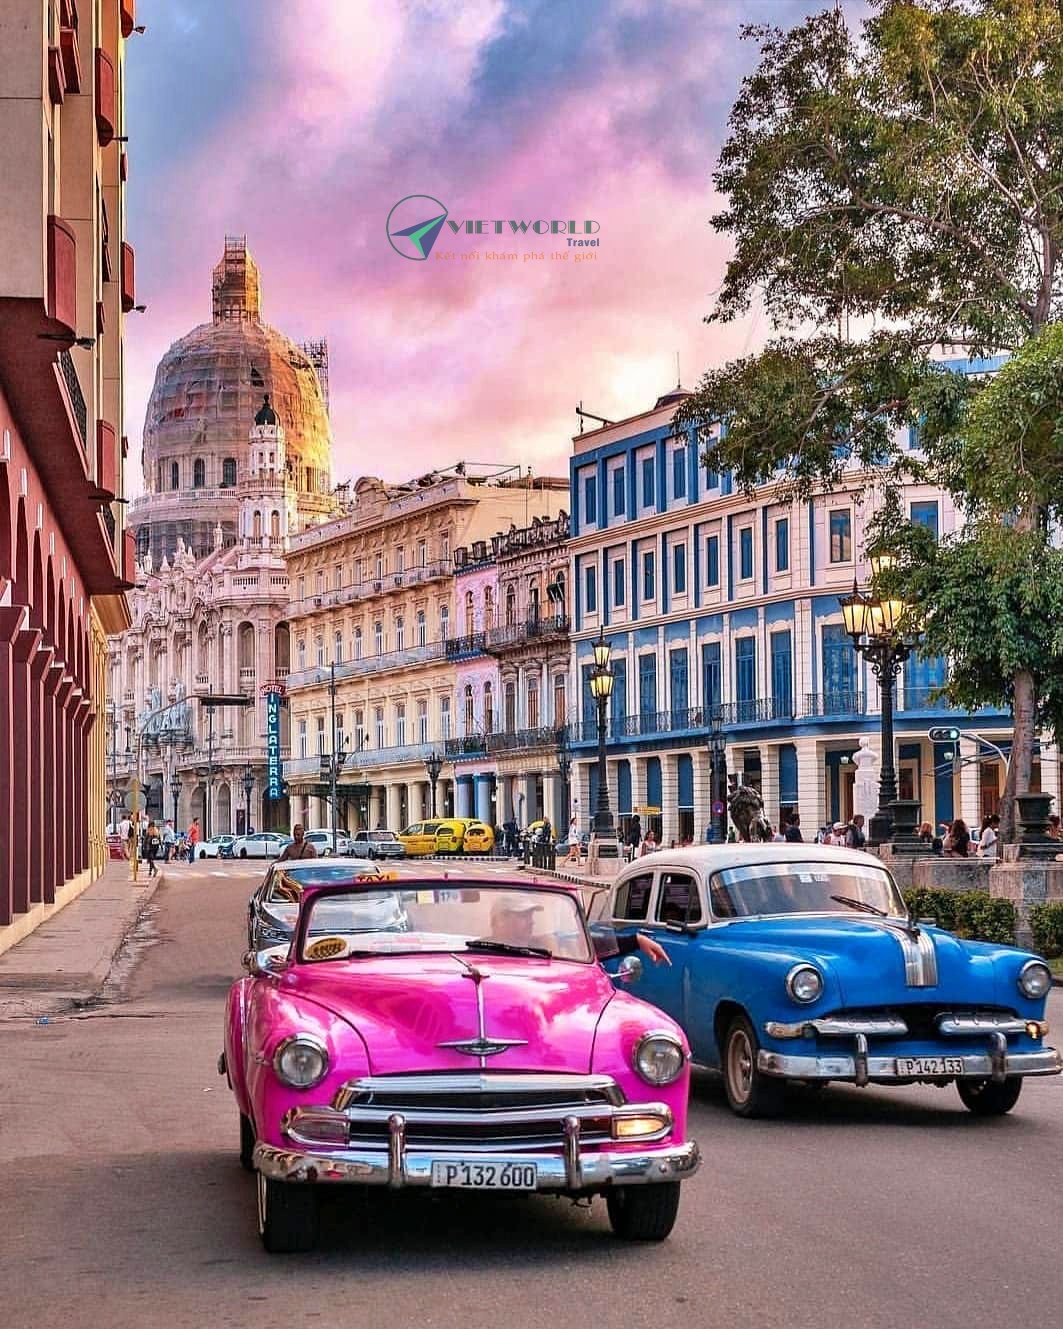 Du lịch Cuba thăm Havana 